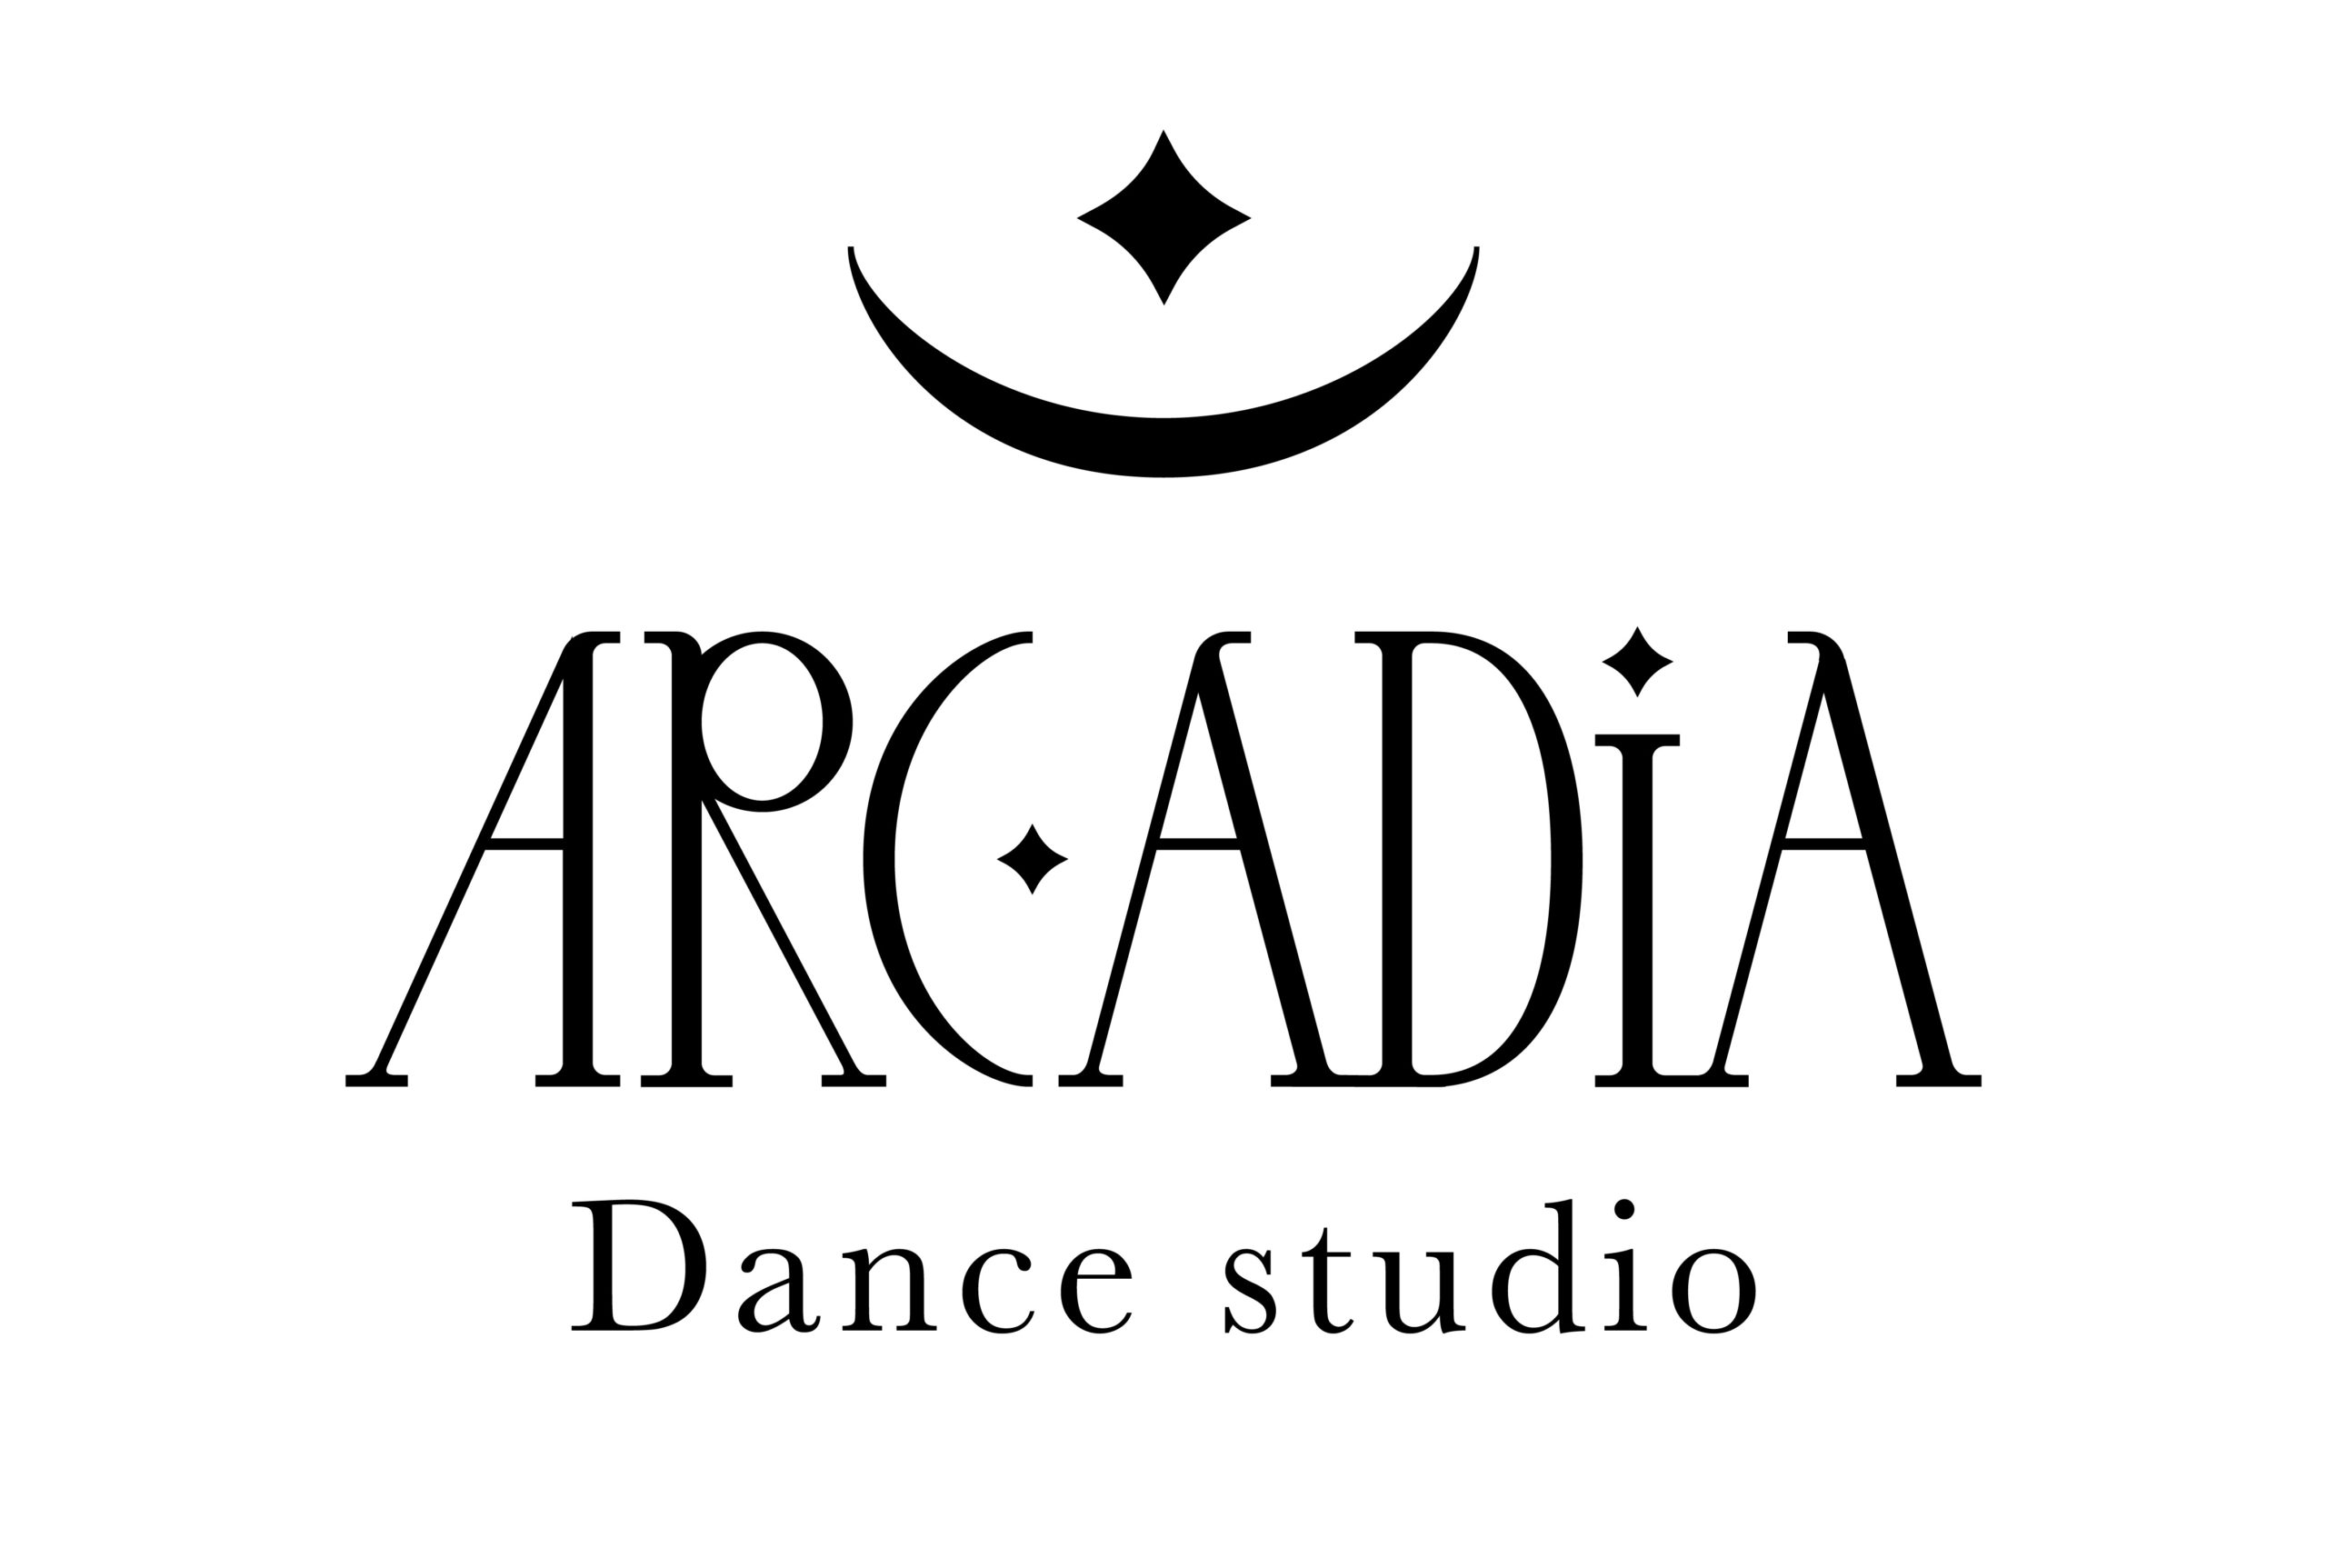 Arcadia Dance studio